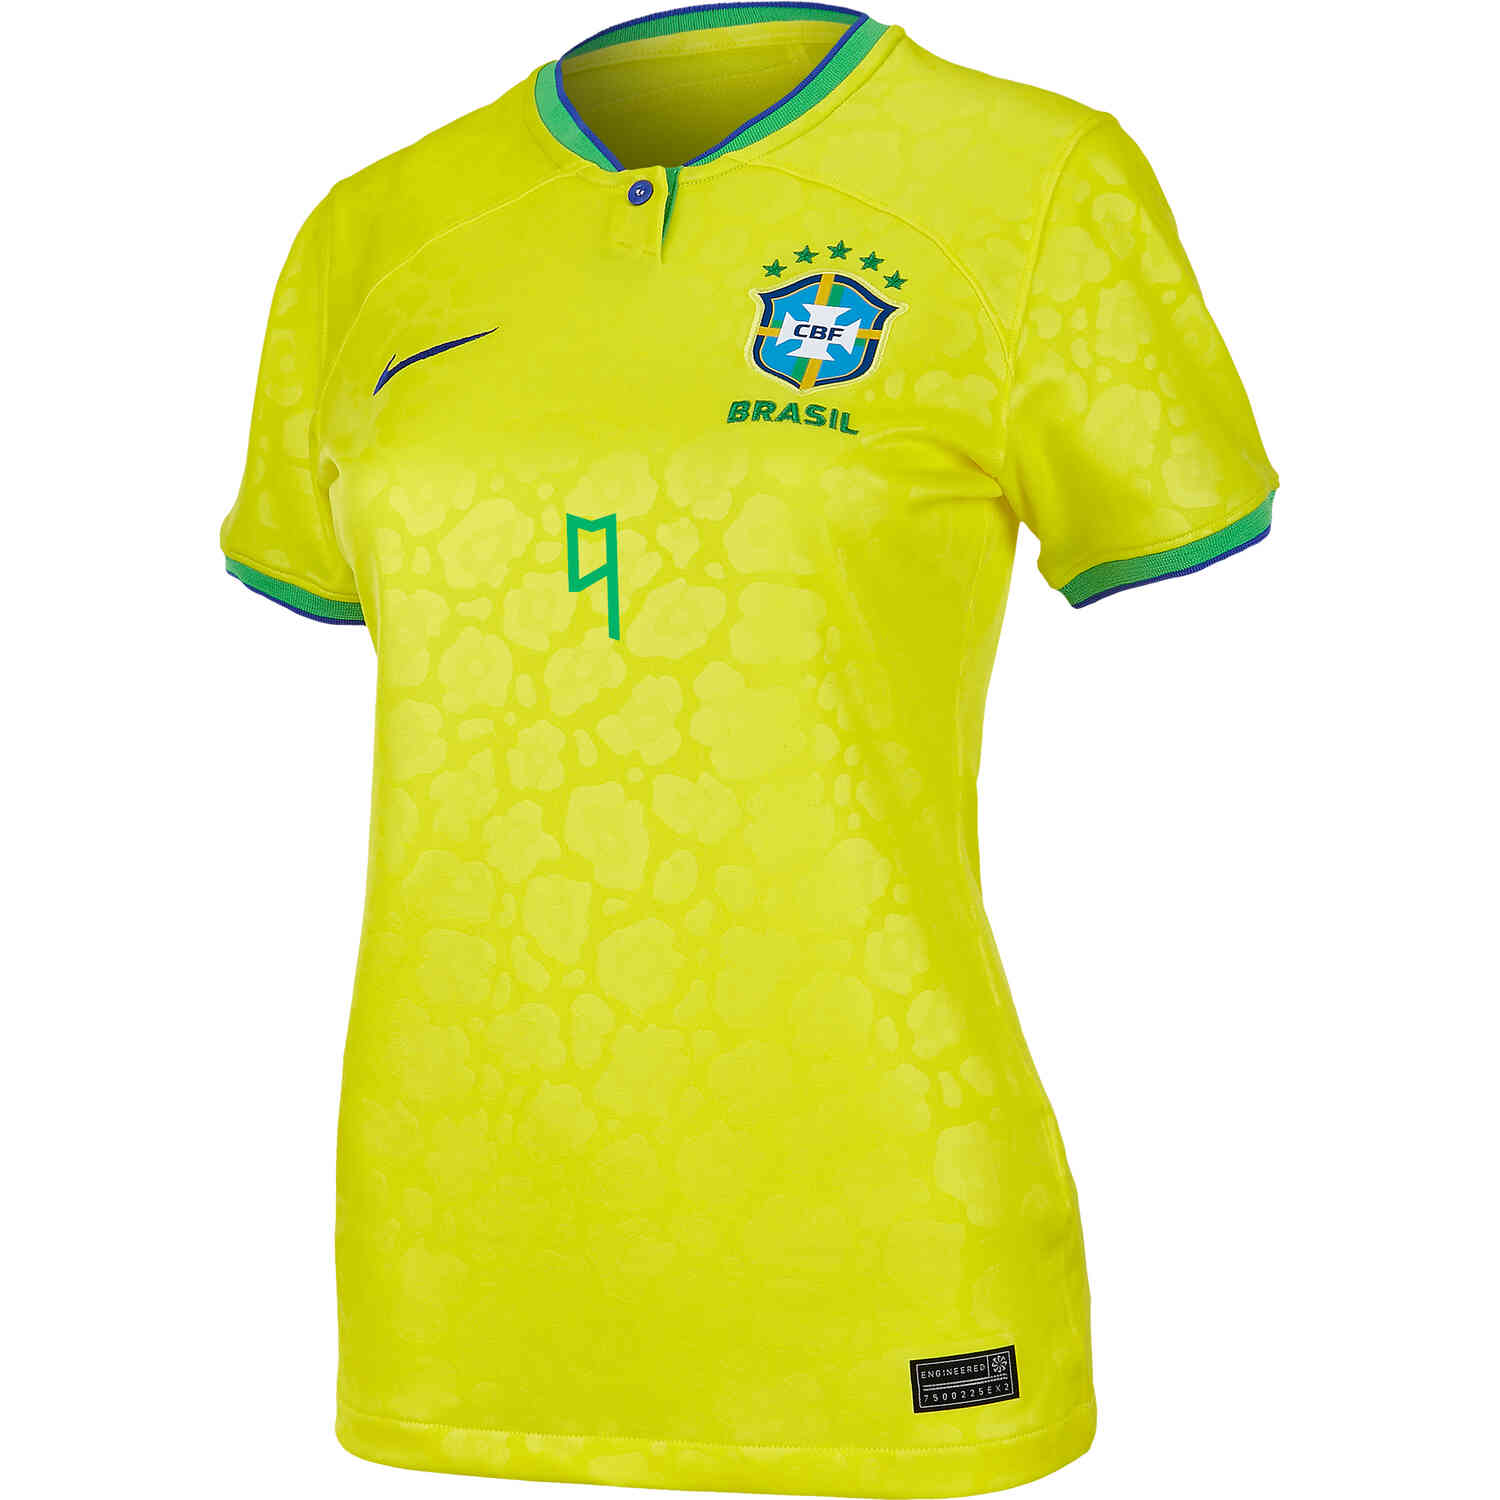 Jersey Brazil 22 23 World Cup 2022